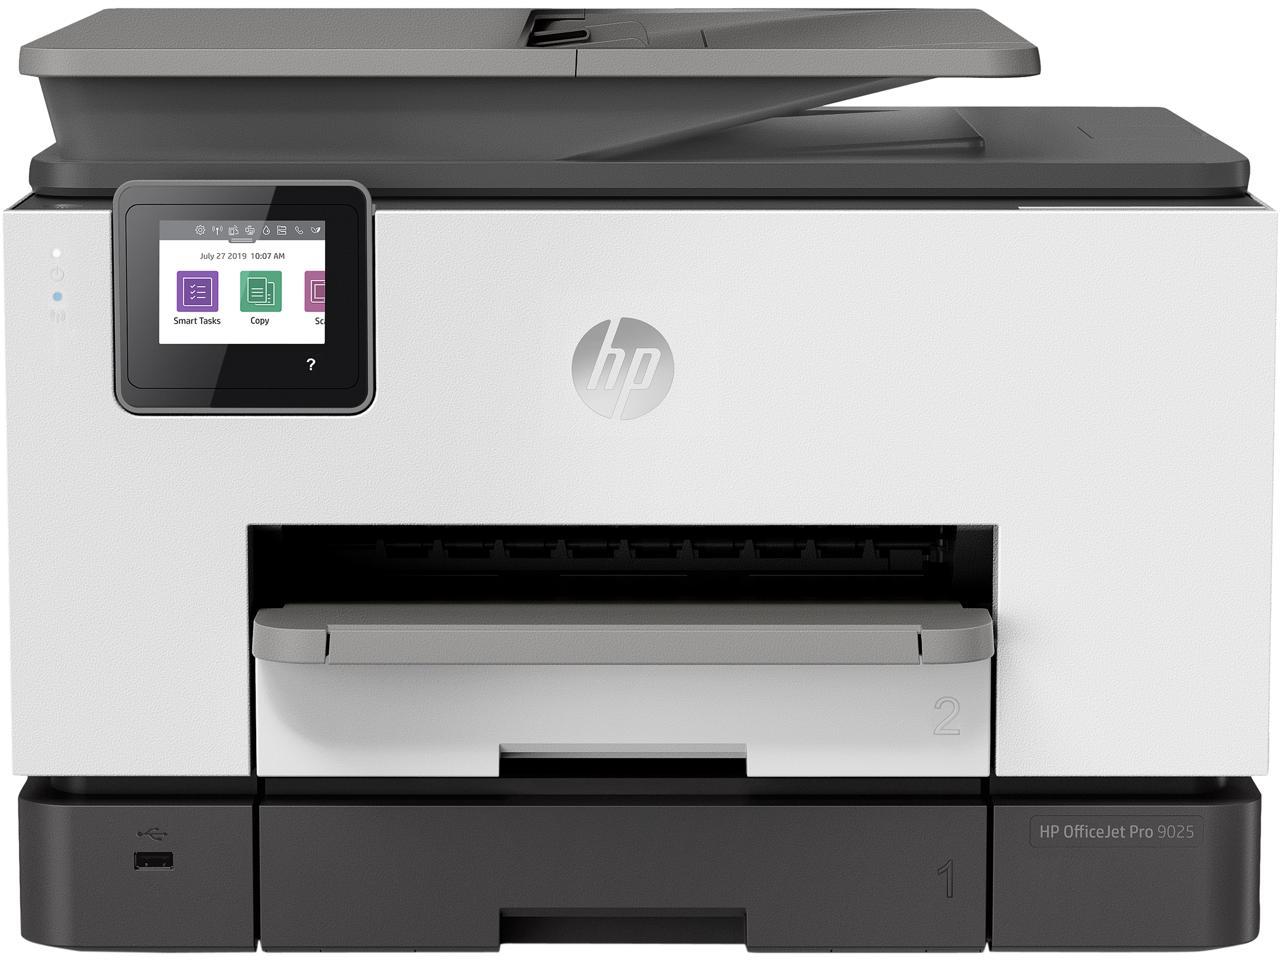 HP Officejet Pro 9025 Wireless Auto-Duplex All-In-One Color Inkjet Printer